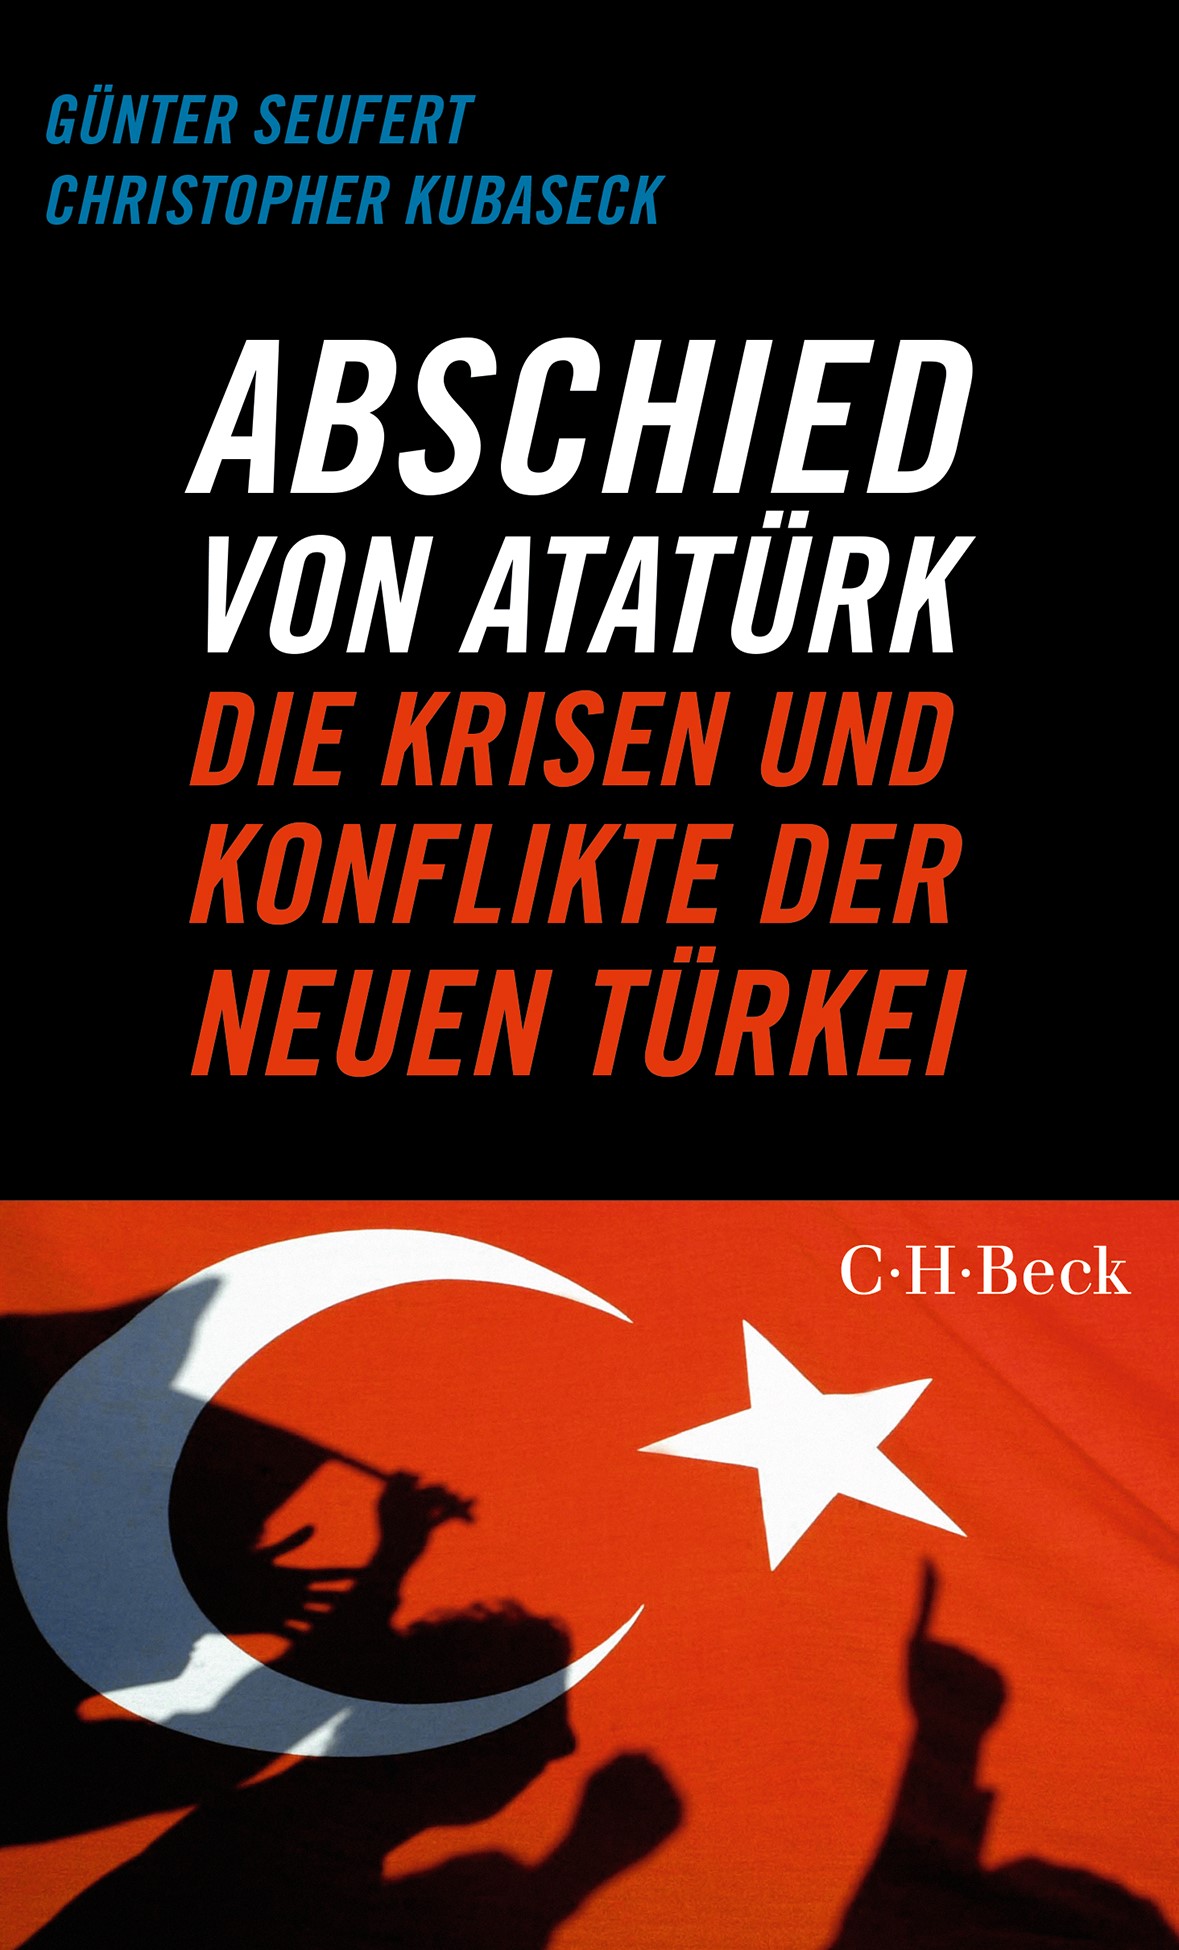 Cover: Seufert, Günter / Kubaseck, Christopher, Abschied von Atatürk